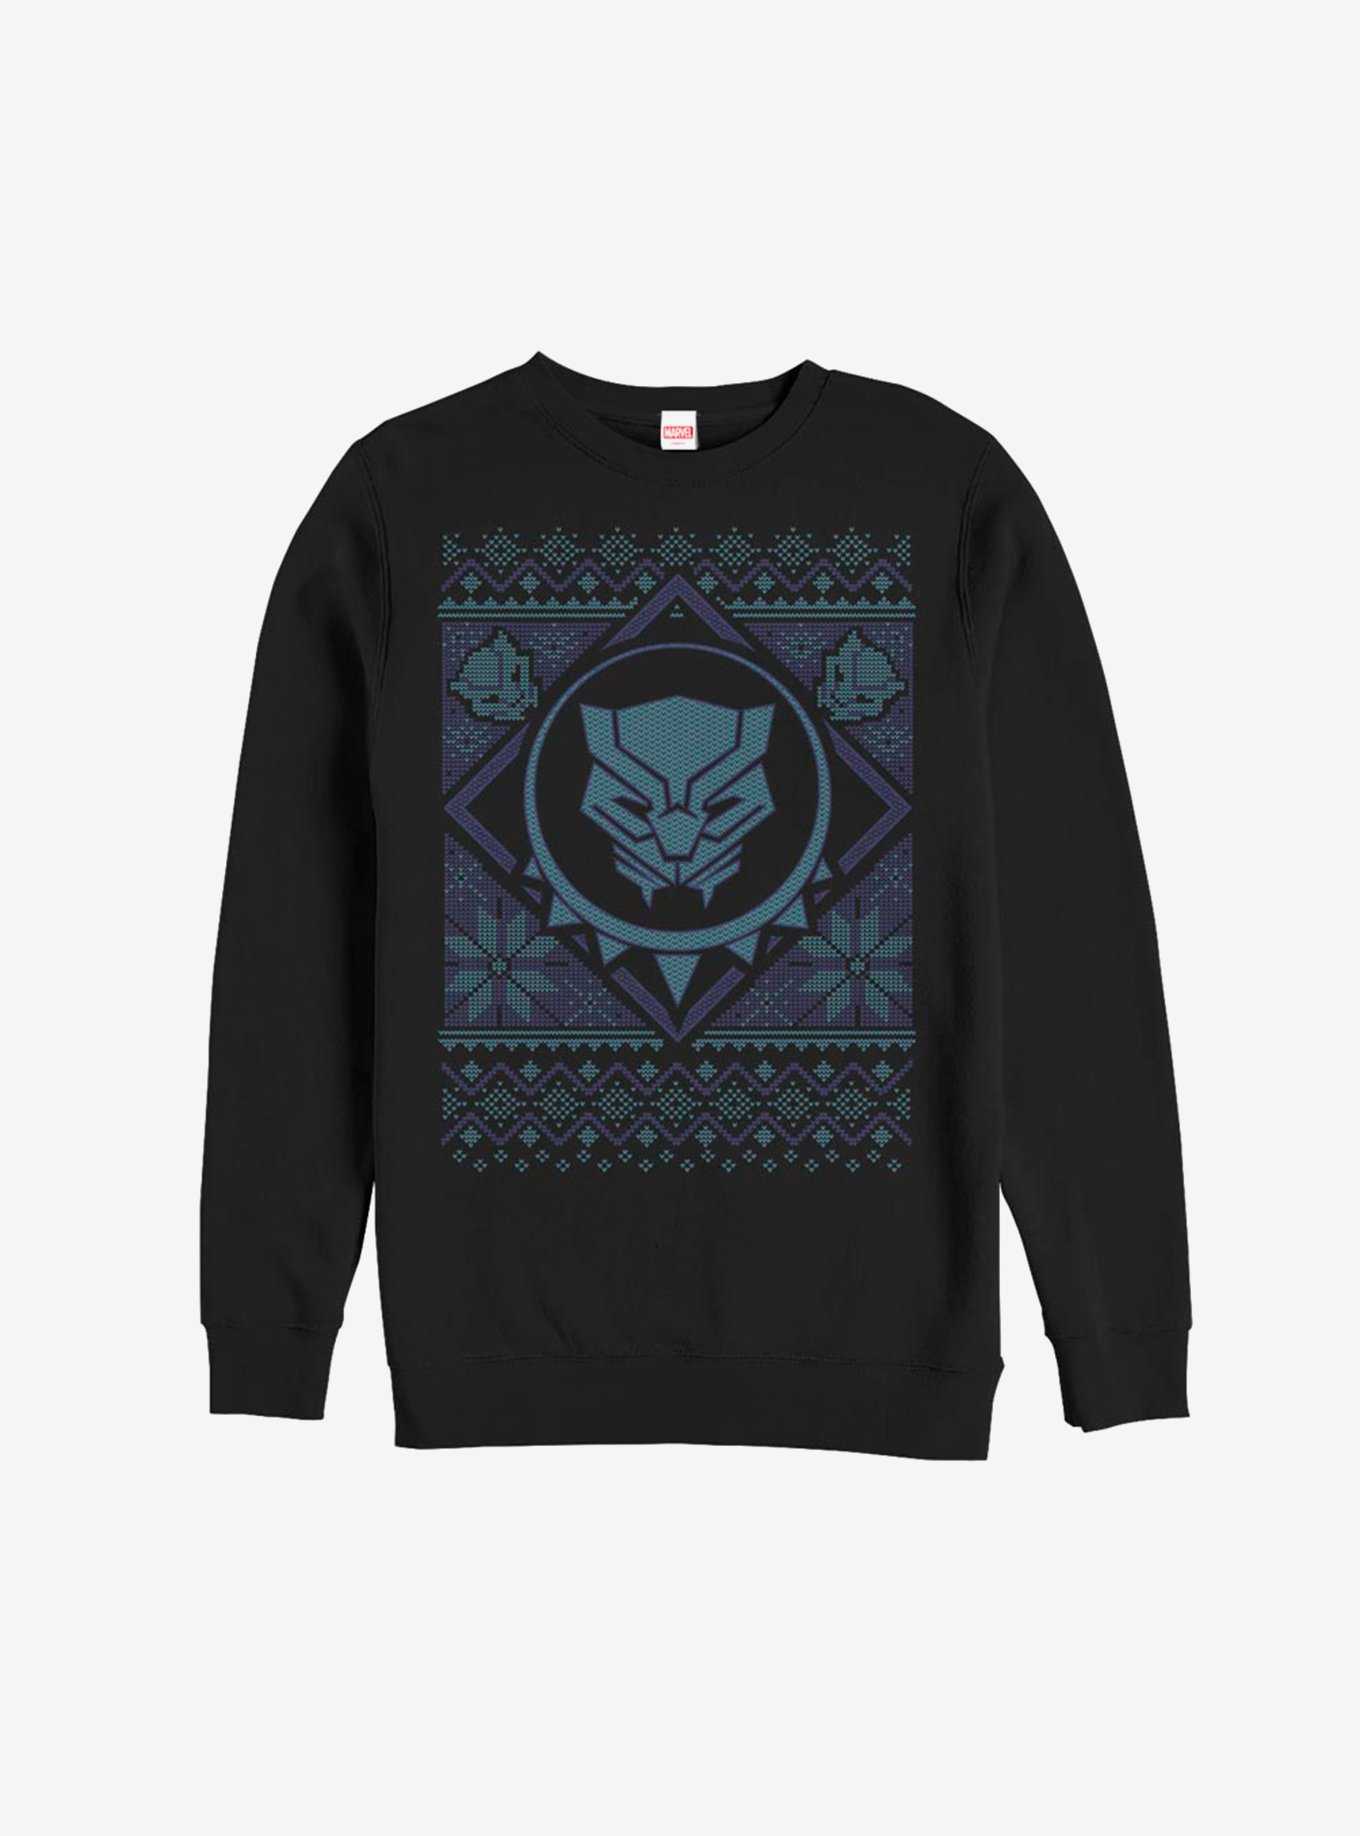 Marvel Black Panther Christmas Pattern Sweatshirt, , hi-res